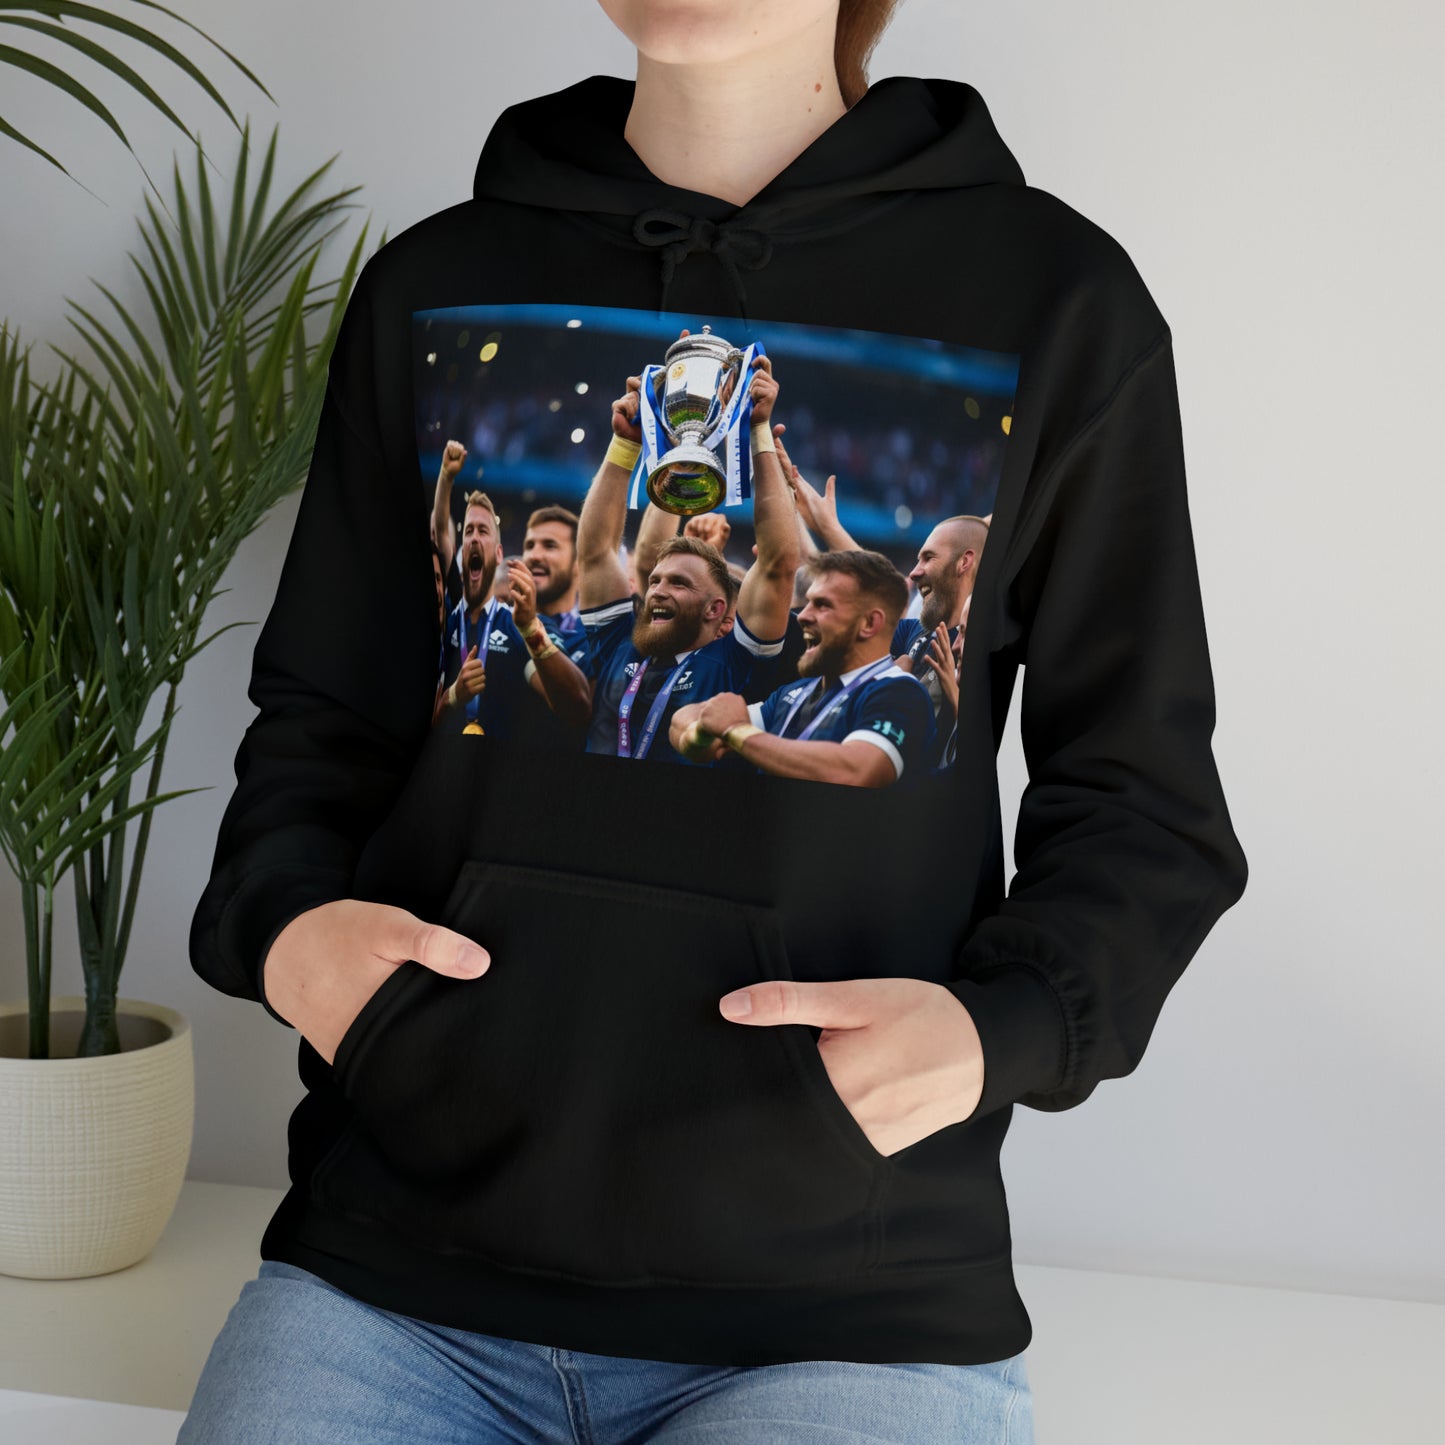 Scotland Winning RWC - dark hoodies